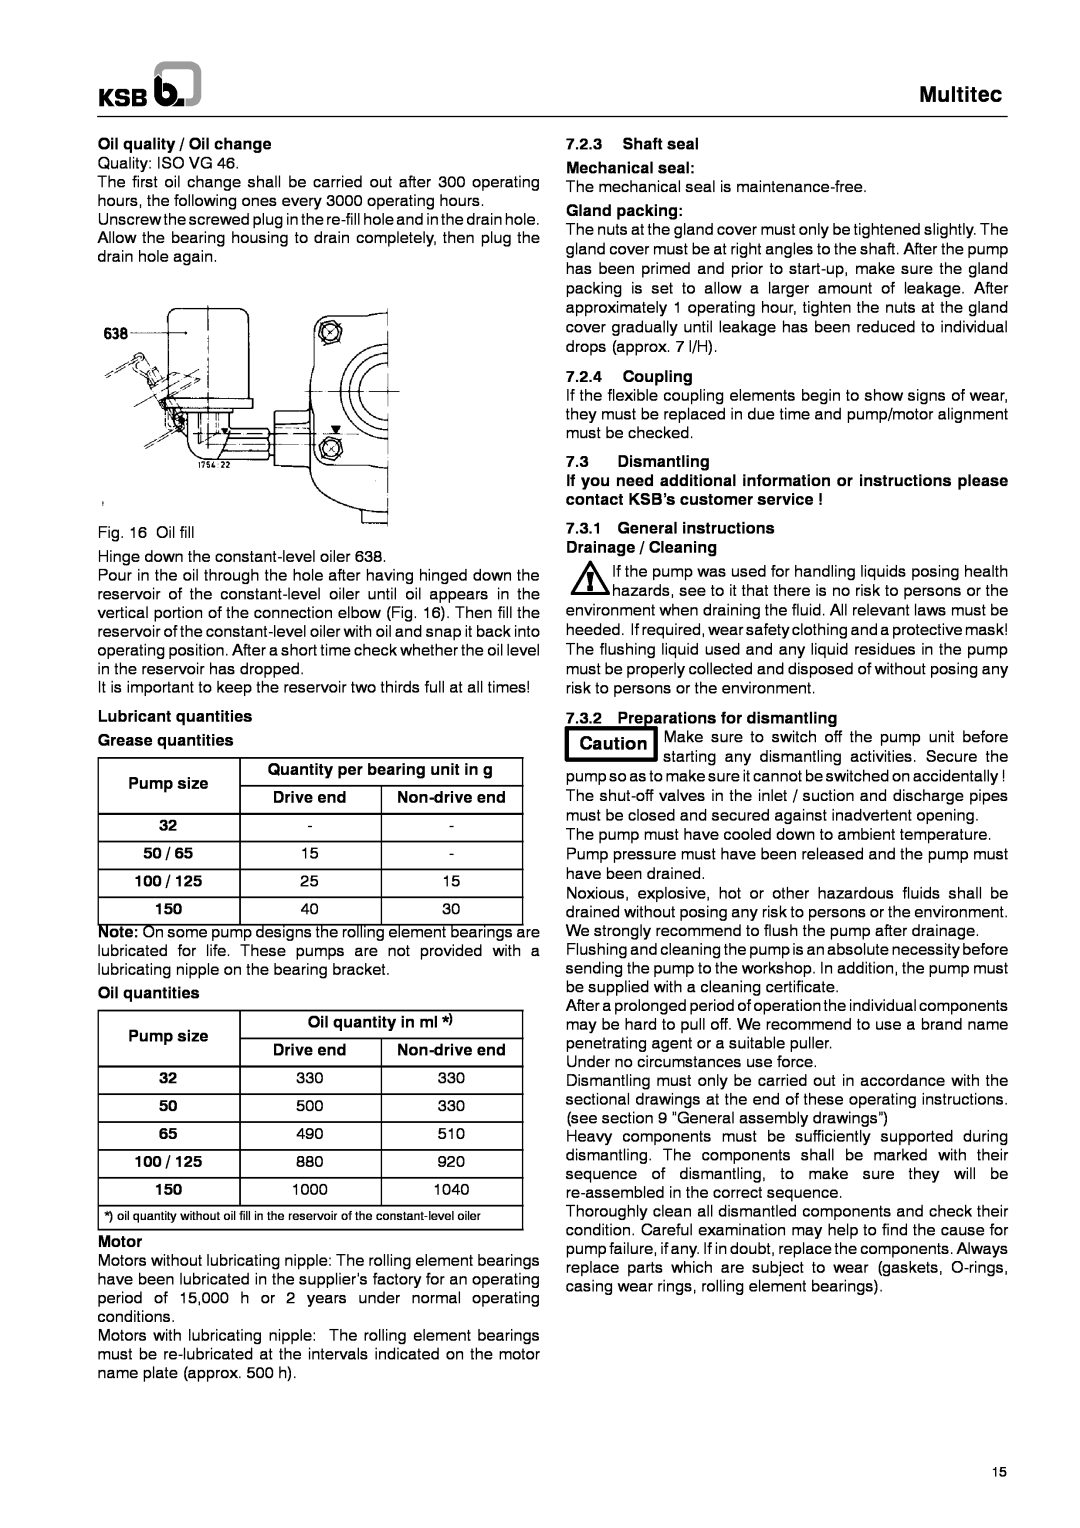 Multitech 1777.8/7-10 G3 operating instructions Multitec, Oil quality / Oil change 